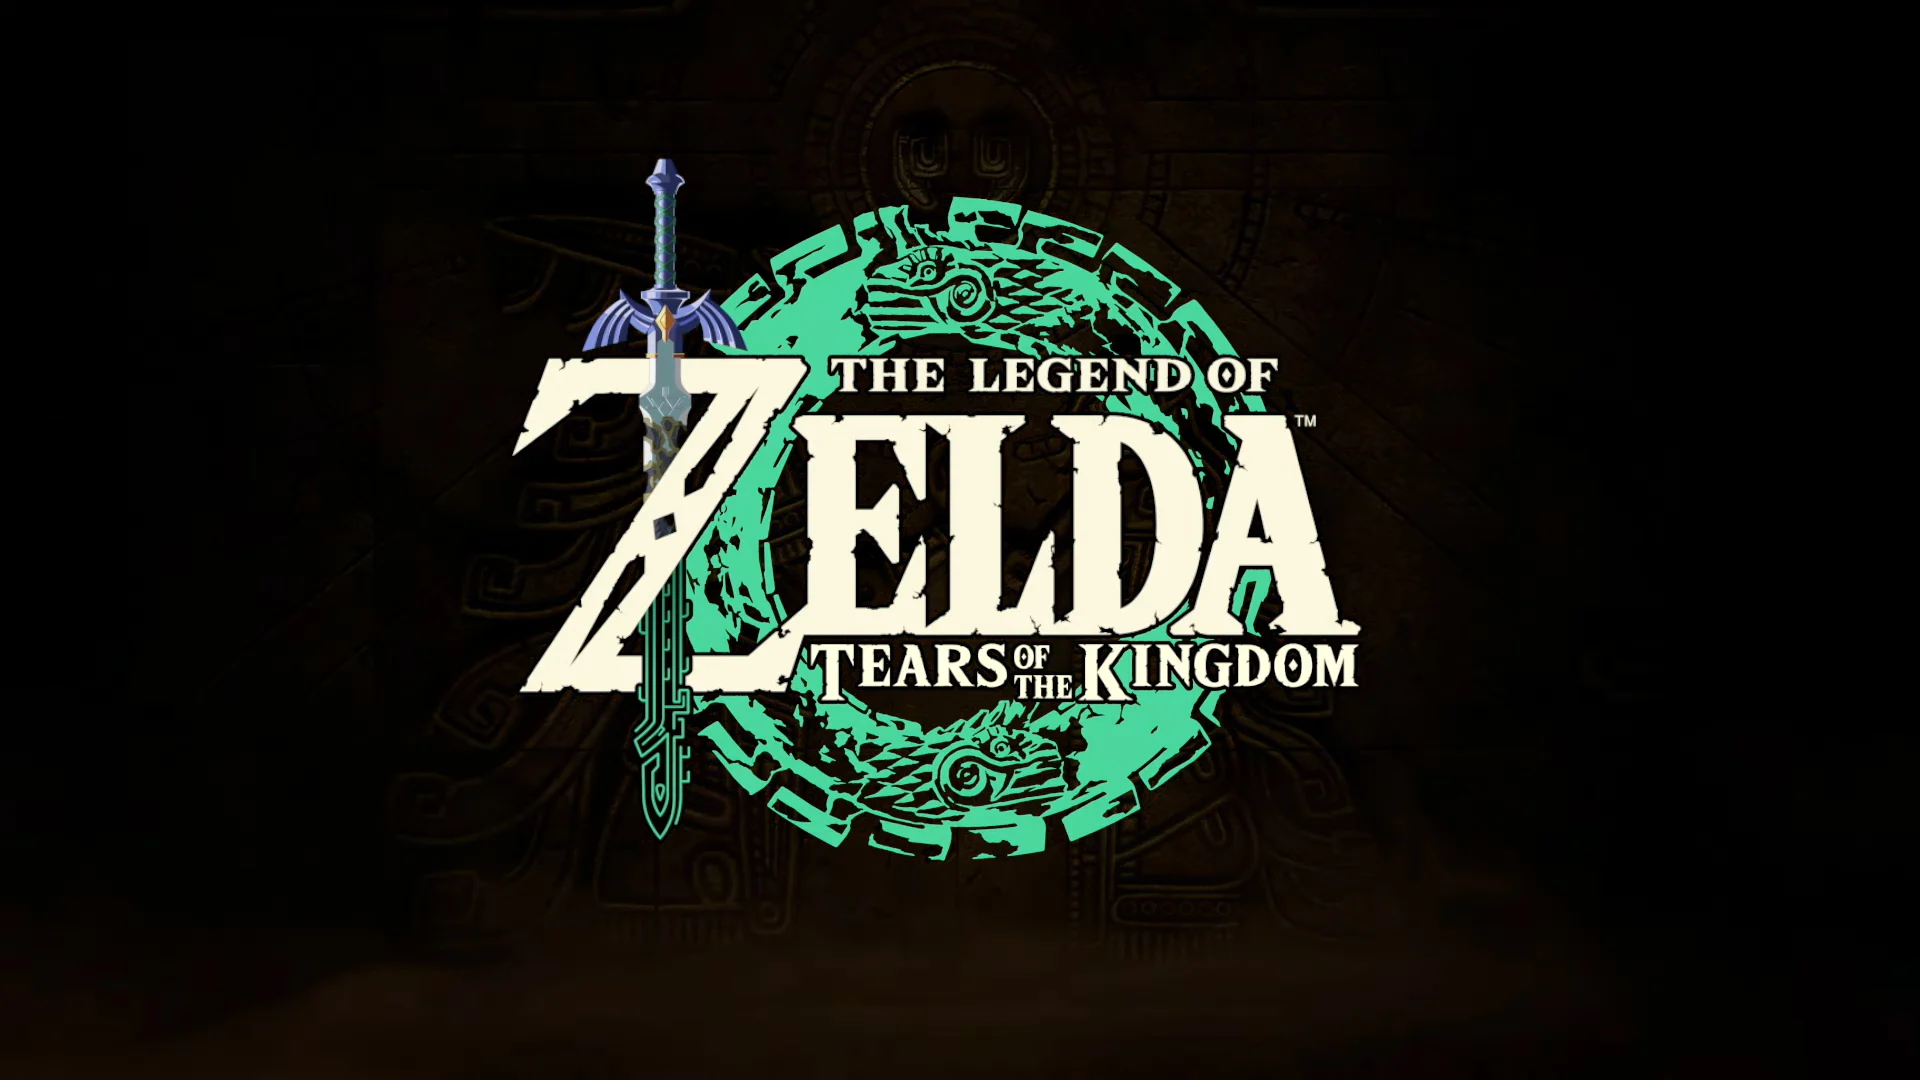 The Legend of Zelda: Tears of the Kingdom Release Date